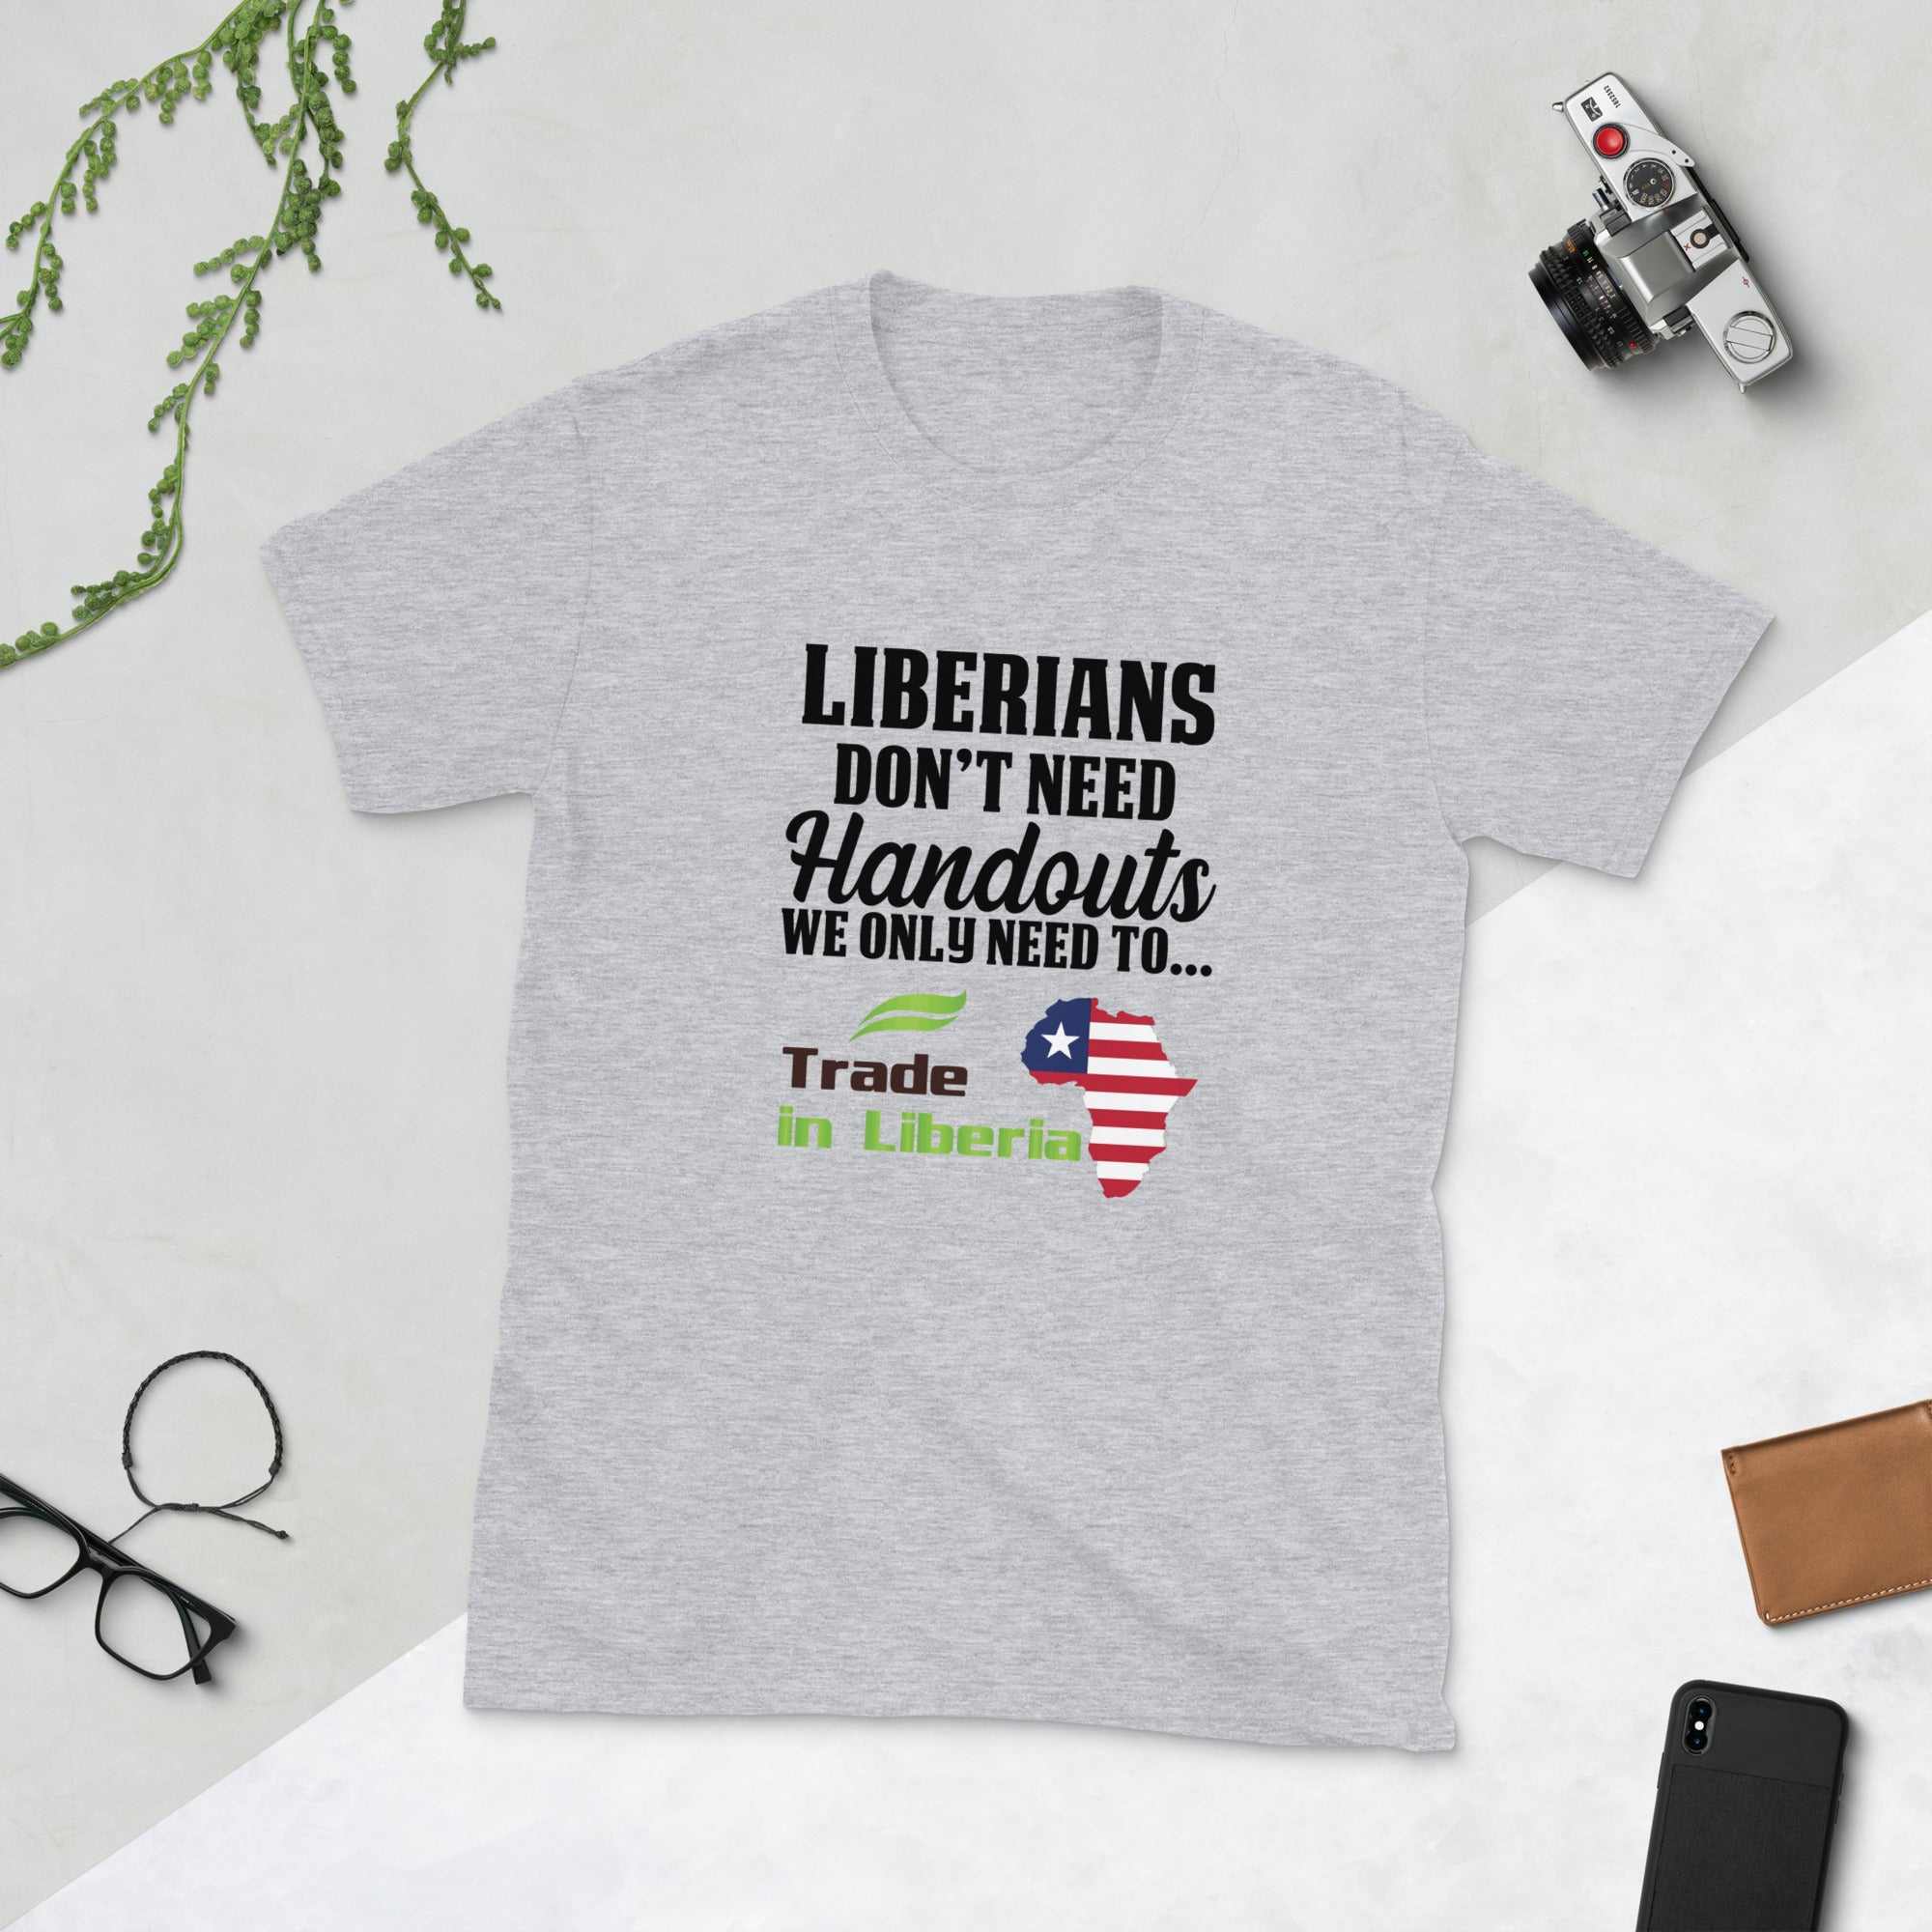 Liberians Don't Need Handouts - Short-Sleeve Unisex T-Shirt